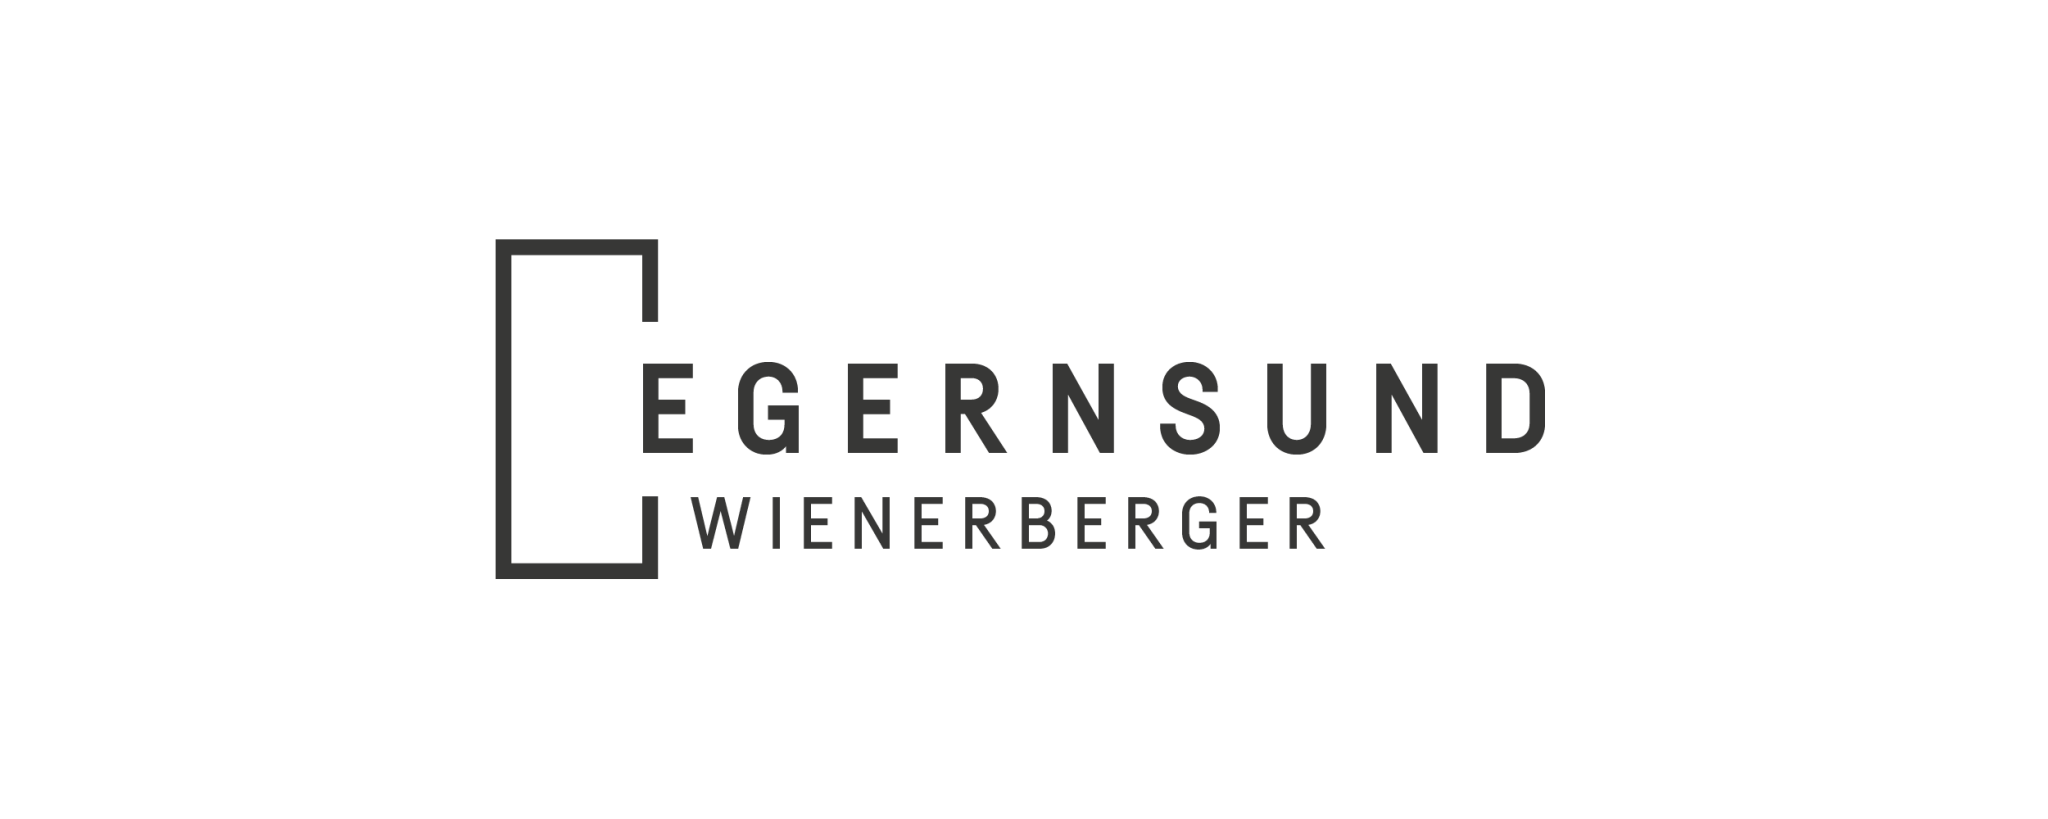 Egernsund_Wienerberger_pos_medium